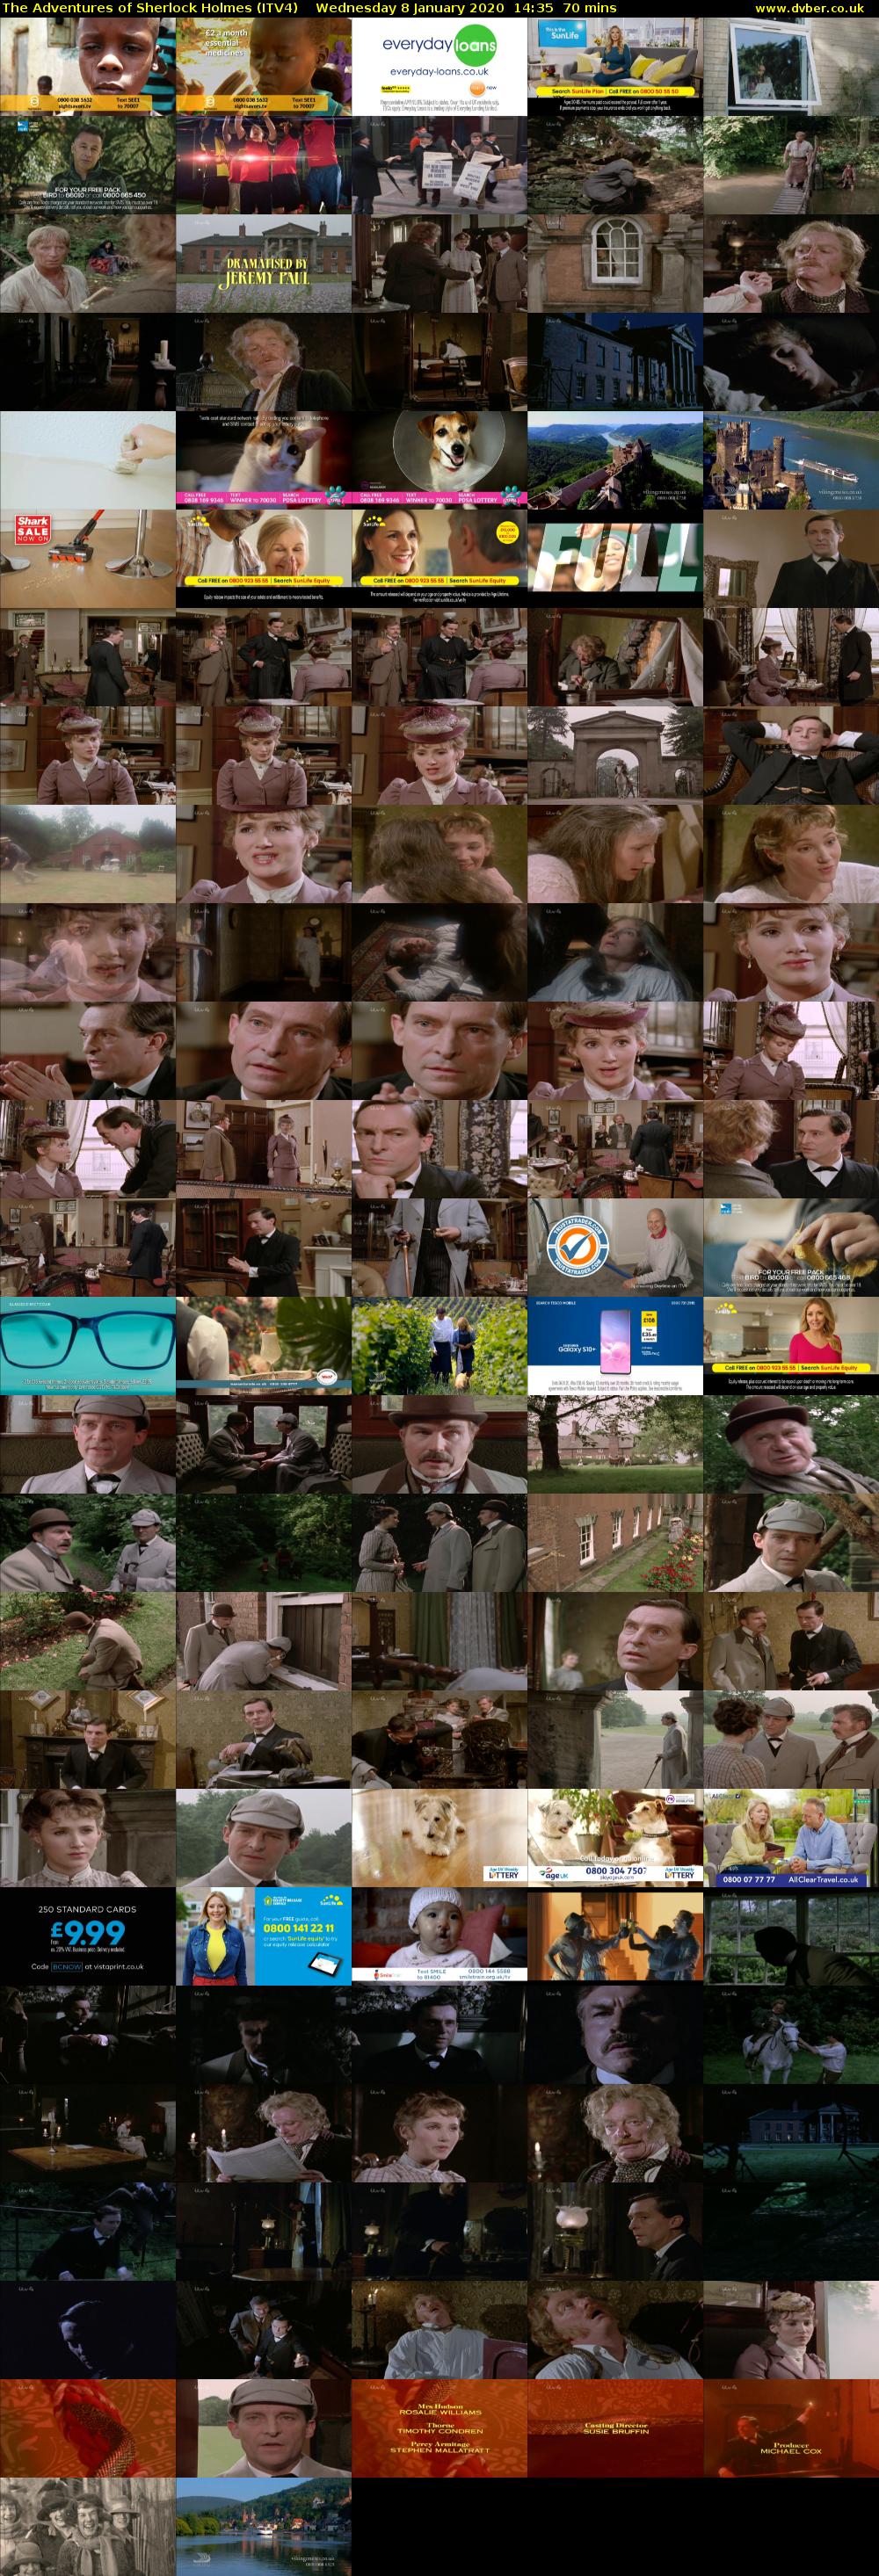 The Adventures of Sherlock Holmes (ITV4) Wednesday 8 January 2020 14:35 - 15:45